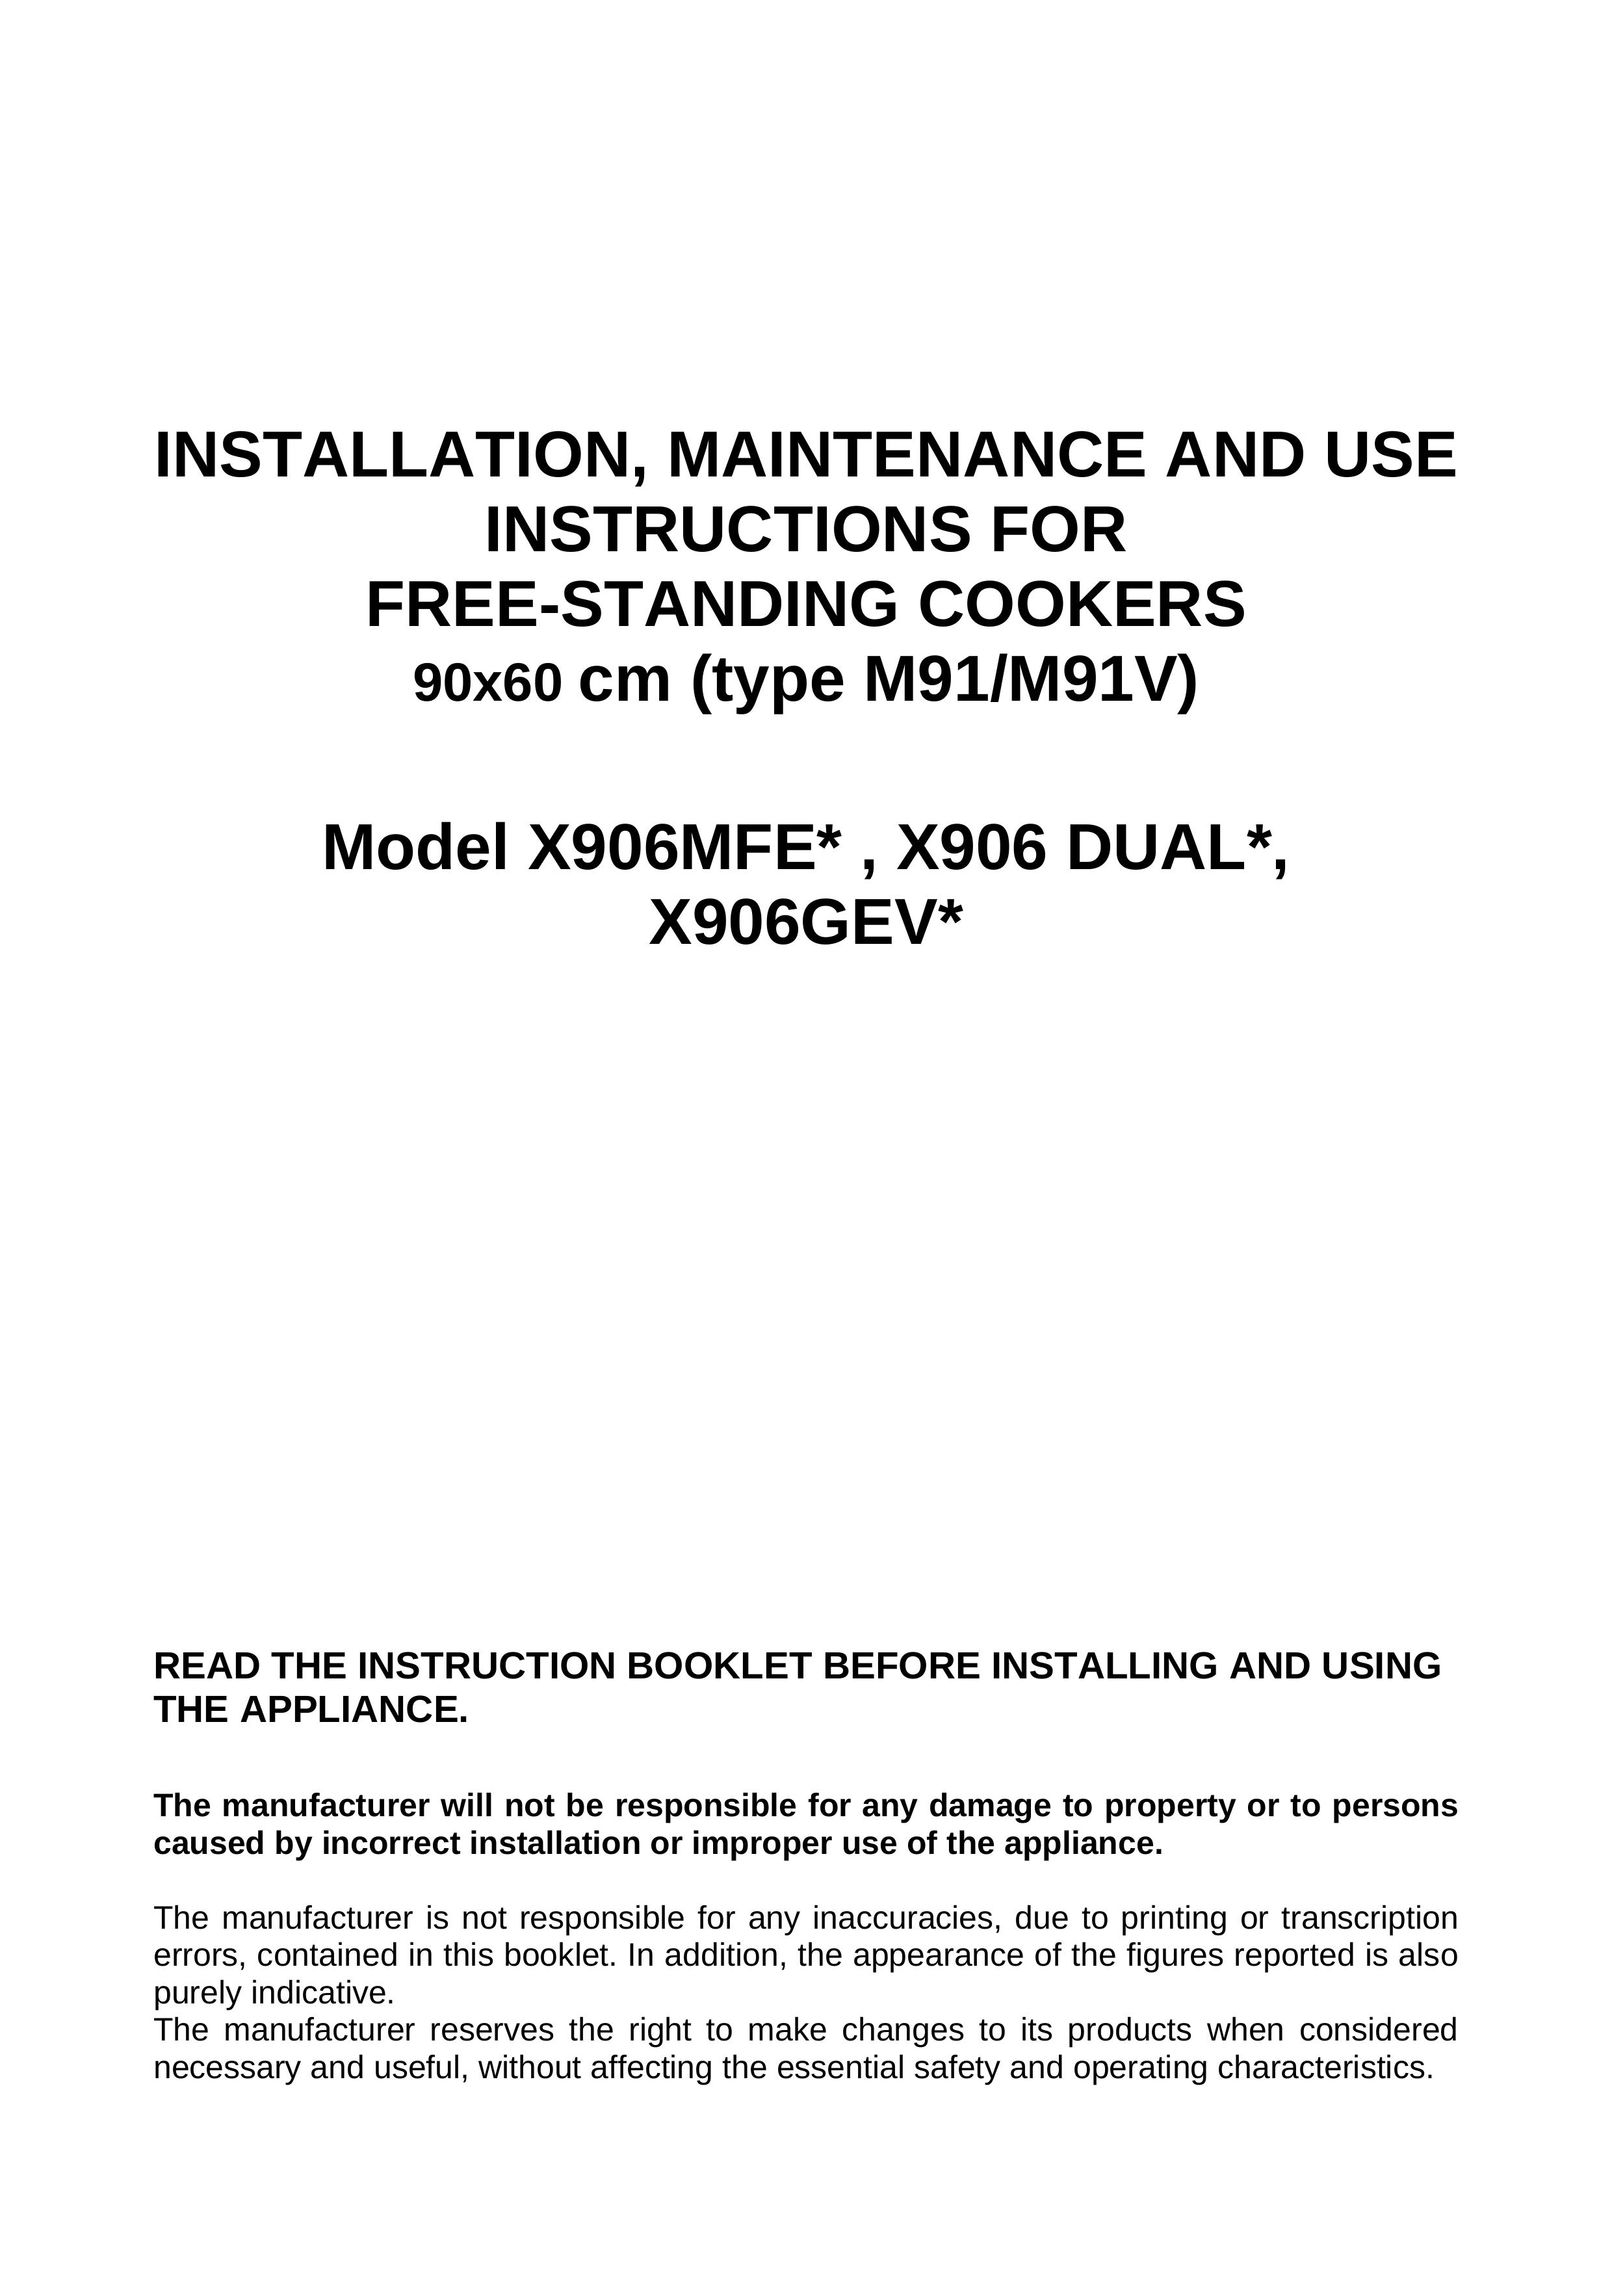 Bertazzoni X906MFE Cooktop User Manual